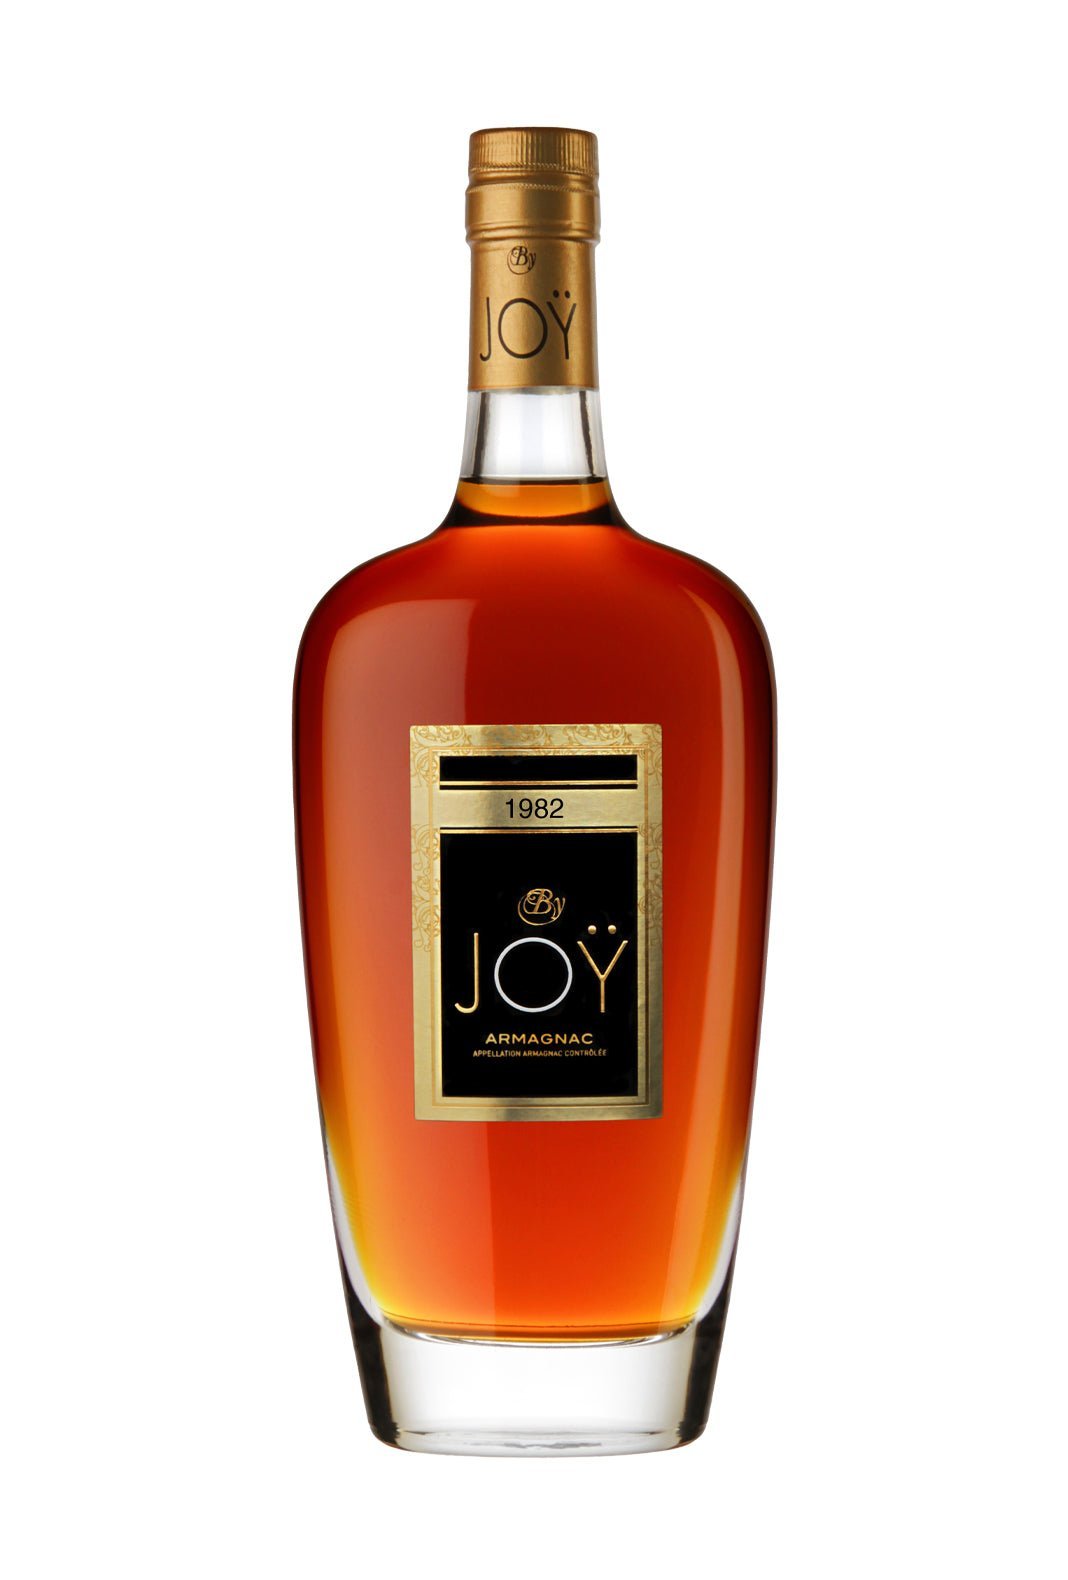 Domaine de Joy 1982 Armagnac 40.5% 700ml | Brandy | Shop online at Spirits of France